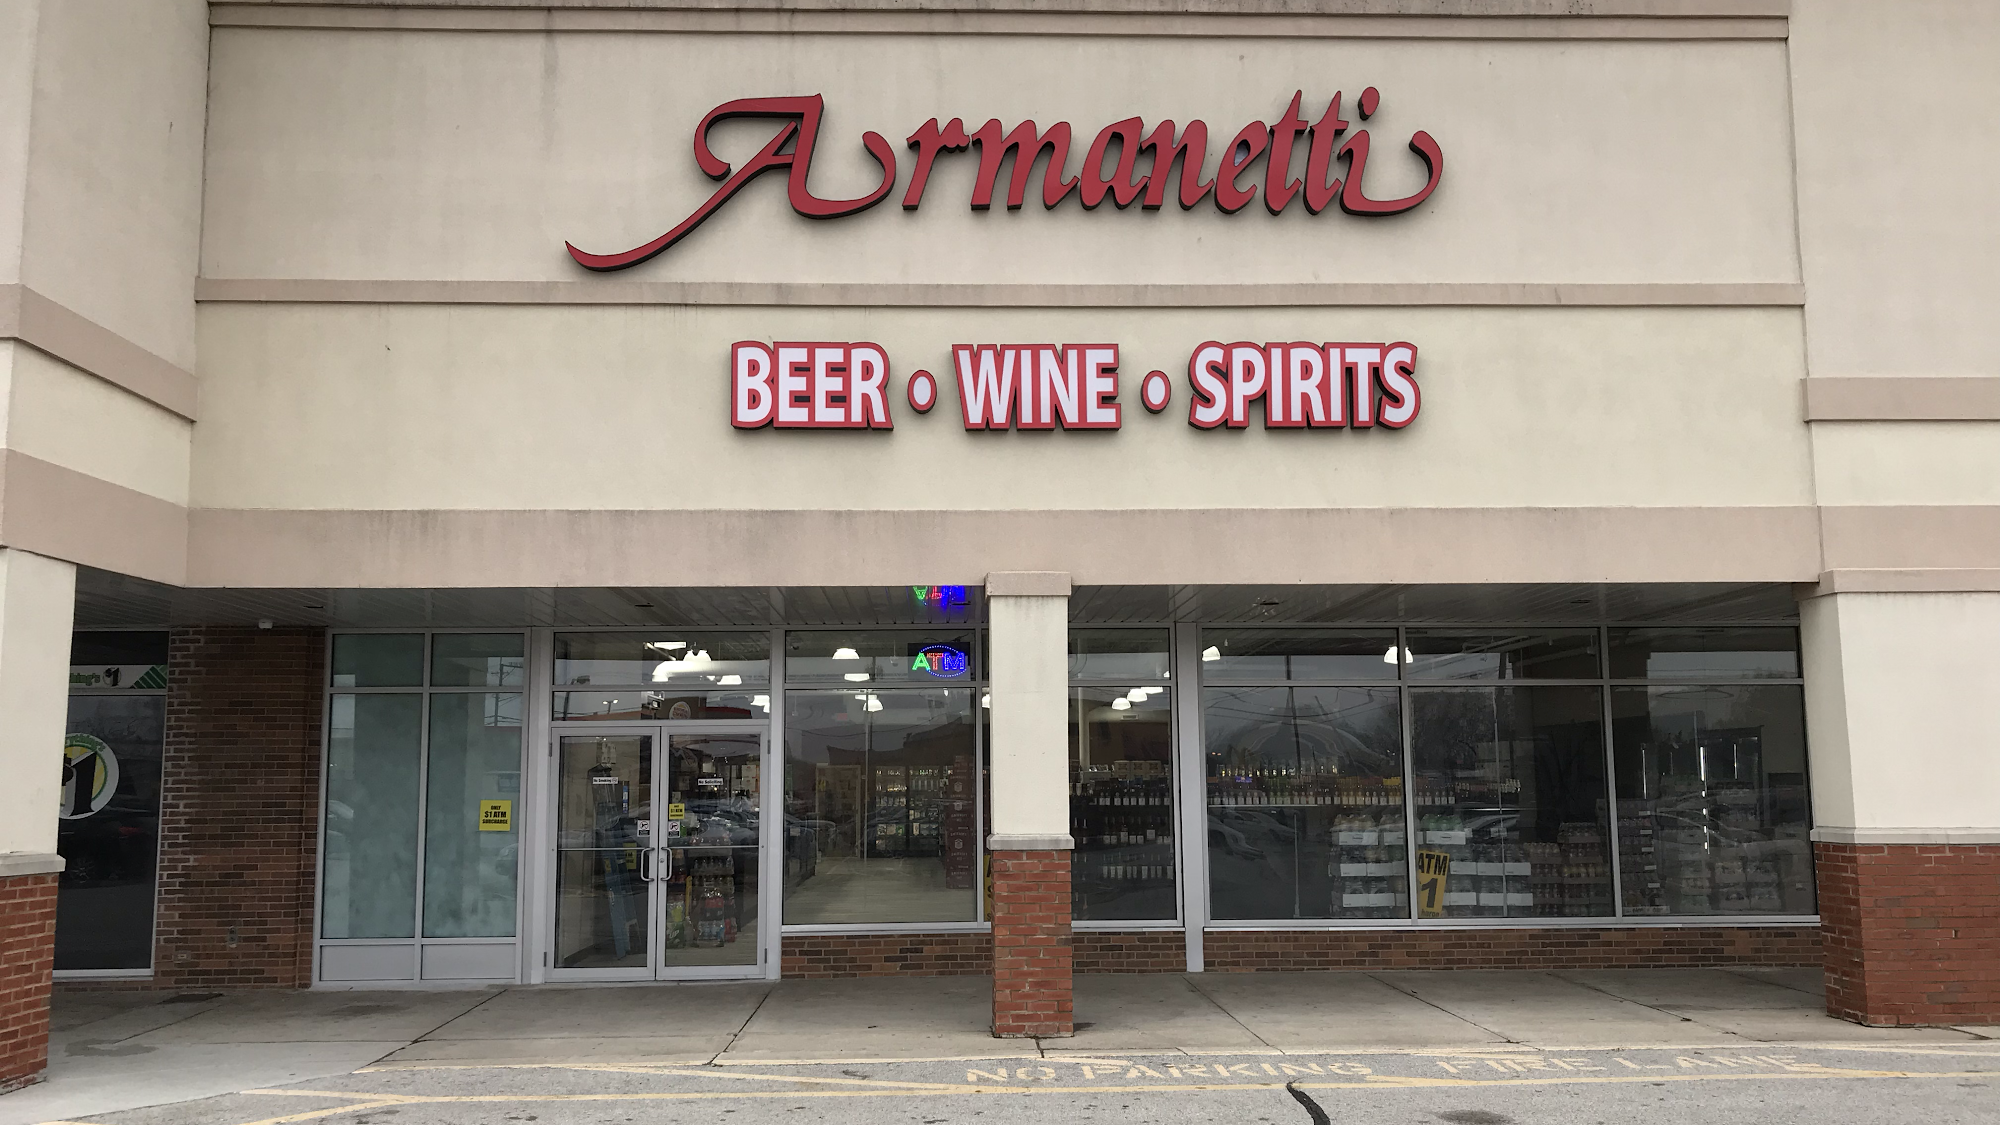 ARMANETTI'S BEER, WINE & SPIRITS